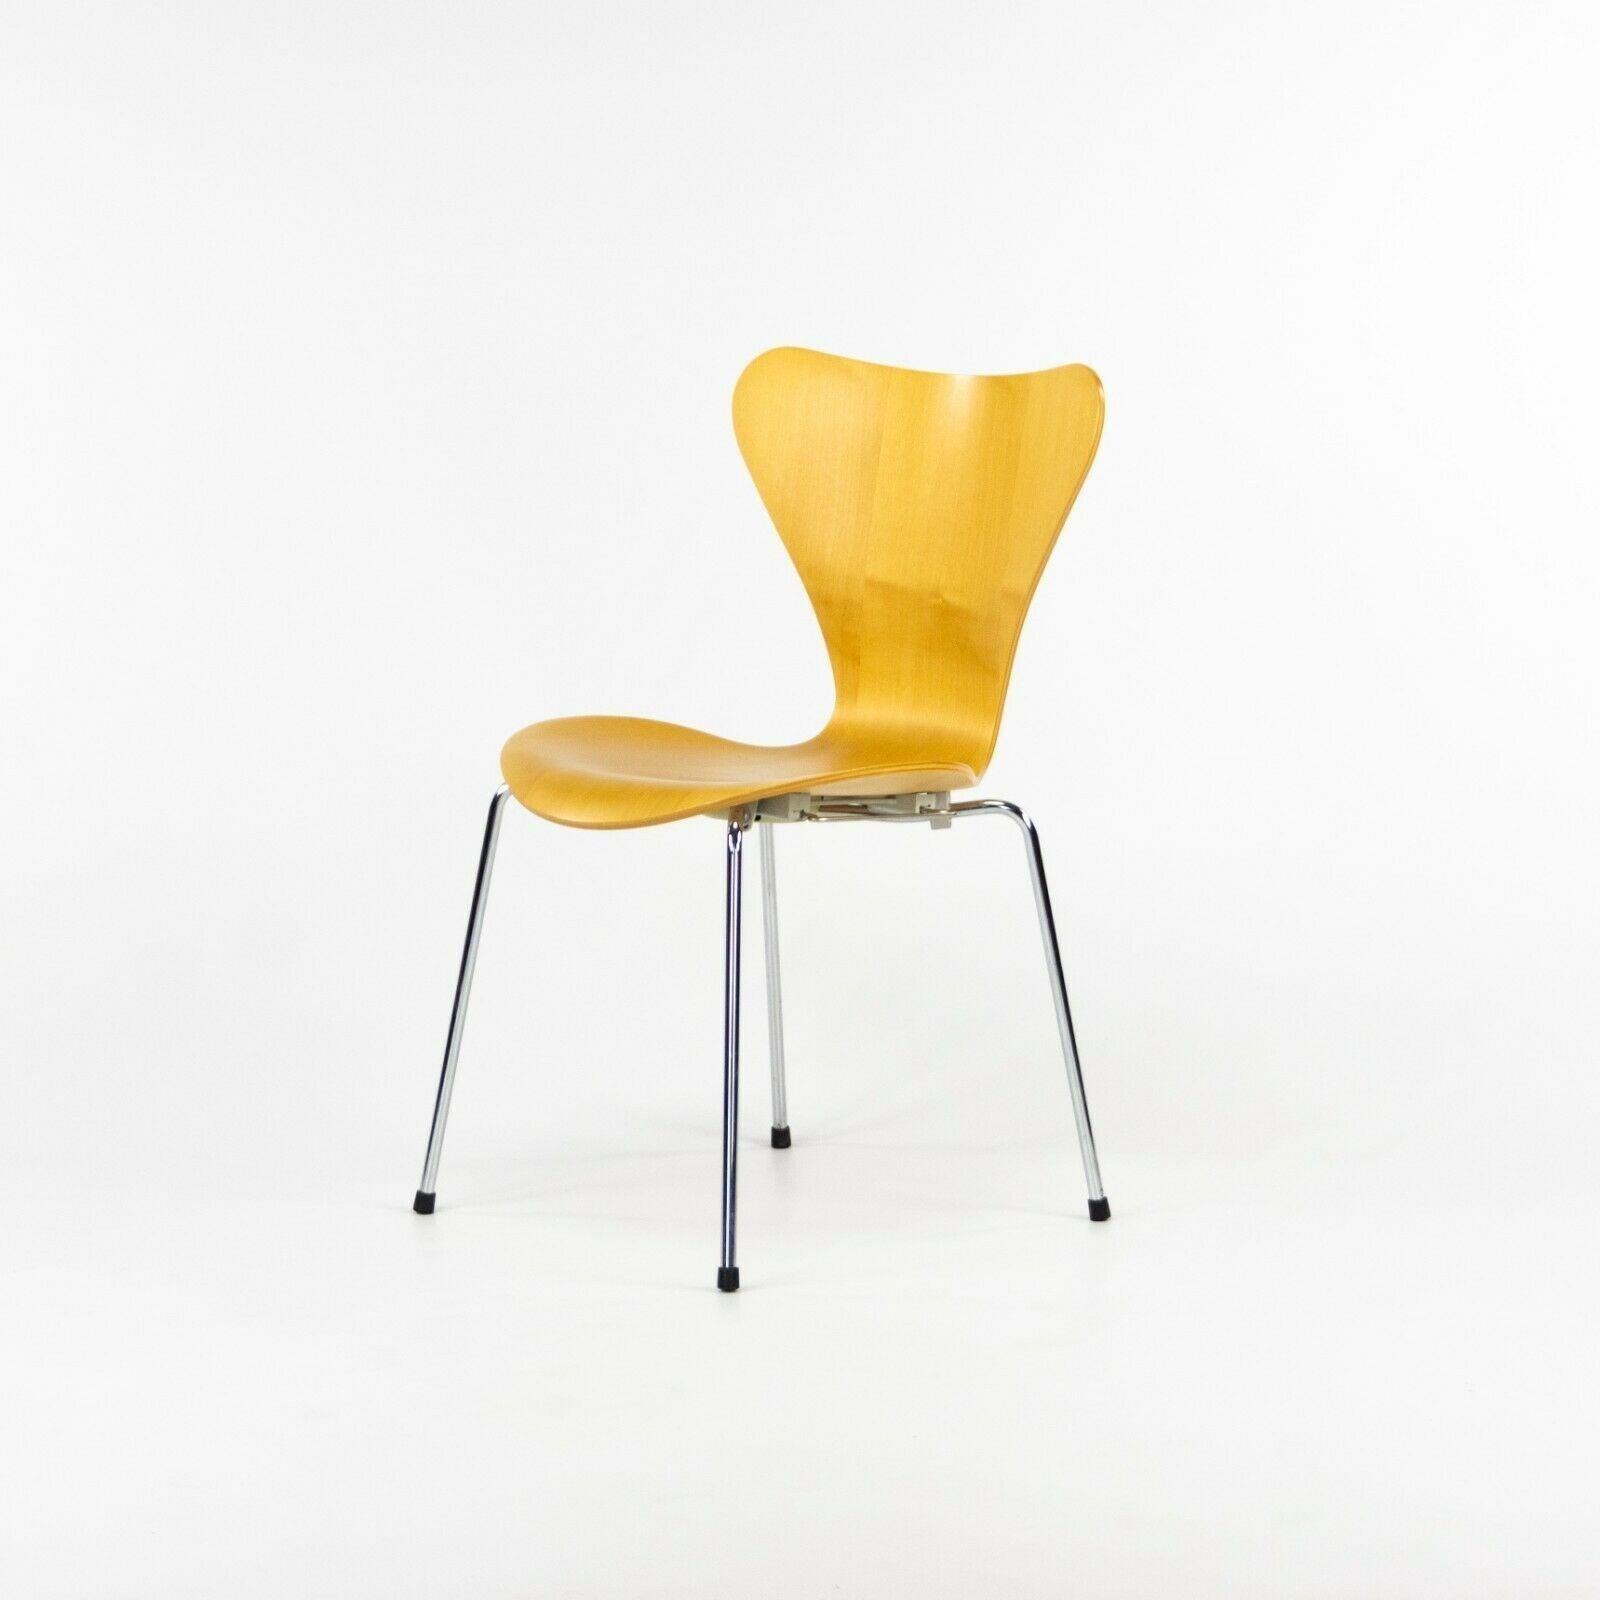 2001 Arne Jacobsen for Fritz Hansen Knoll Series 7 Stacking & Interlocking Chair For Sale 1